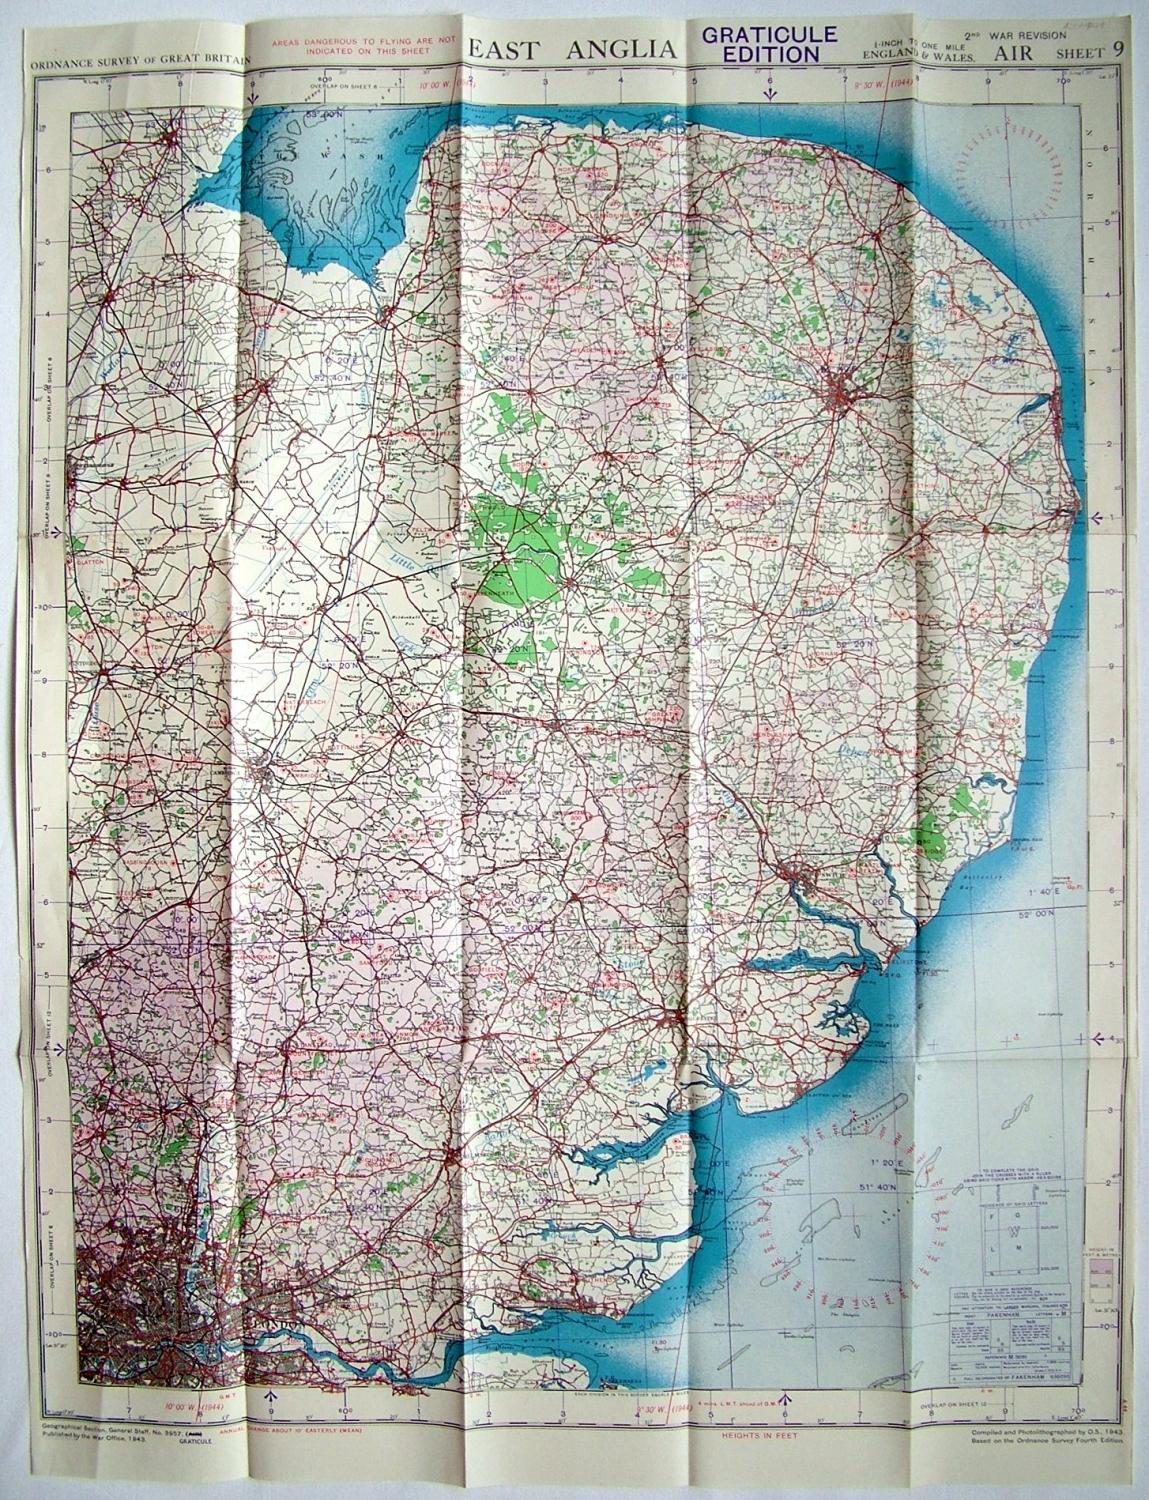 RAF Flight Map - East Anglia